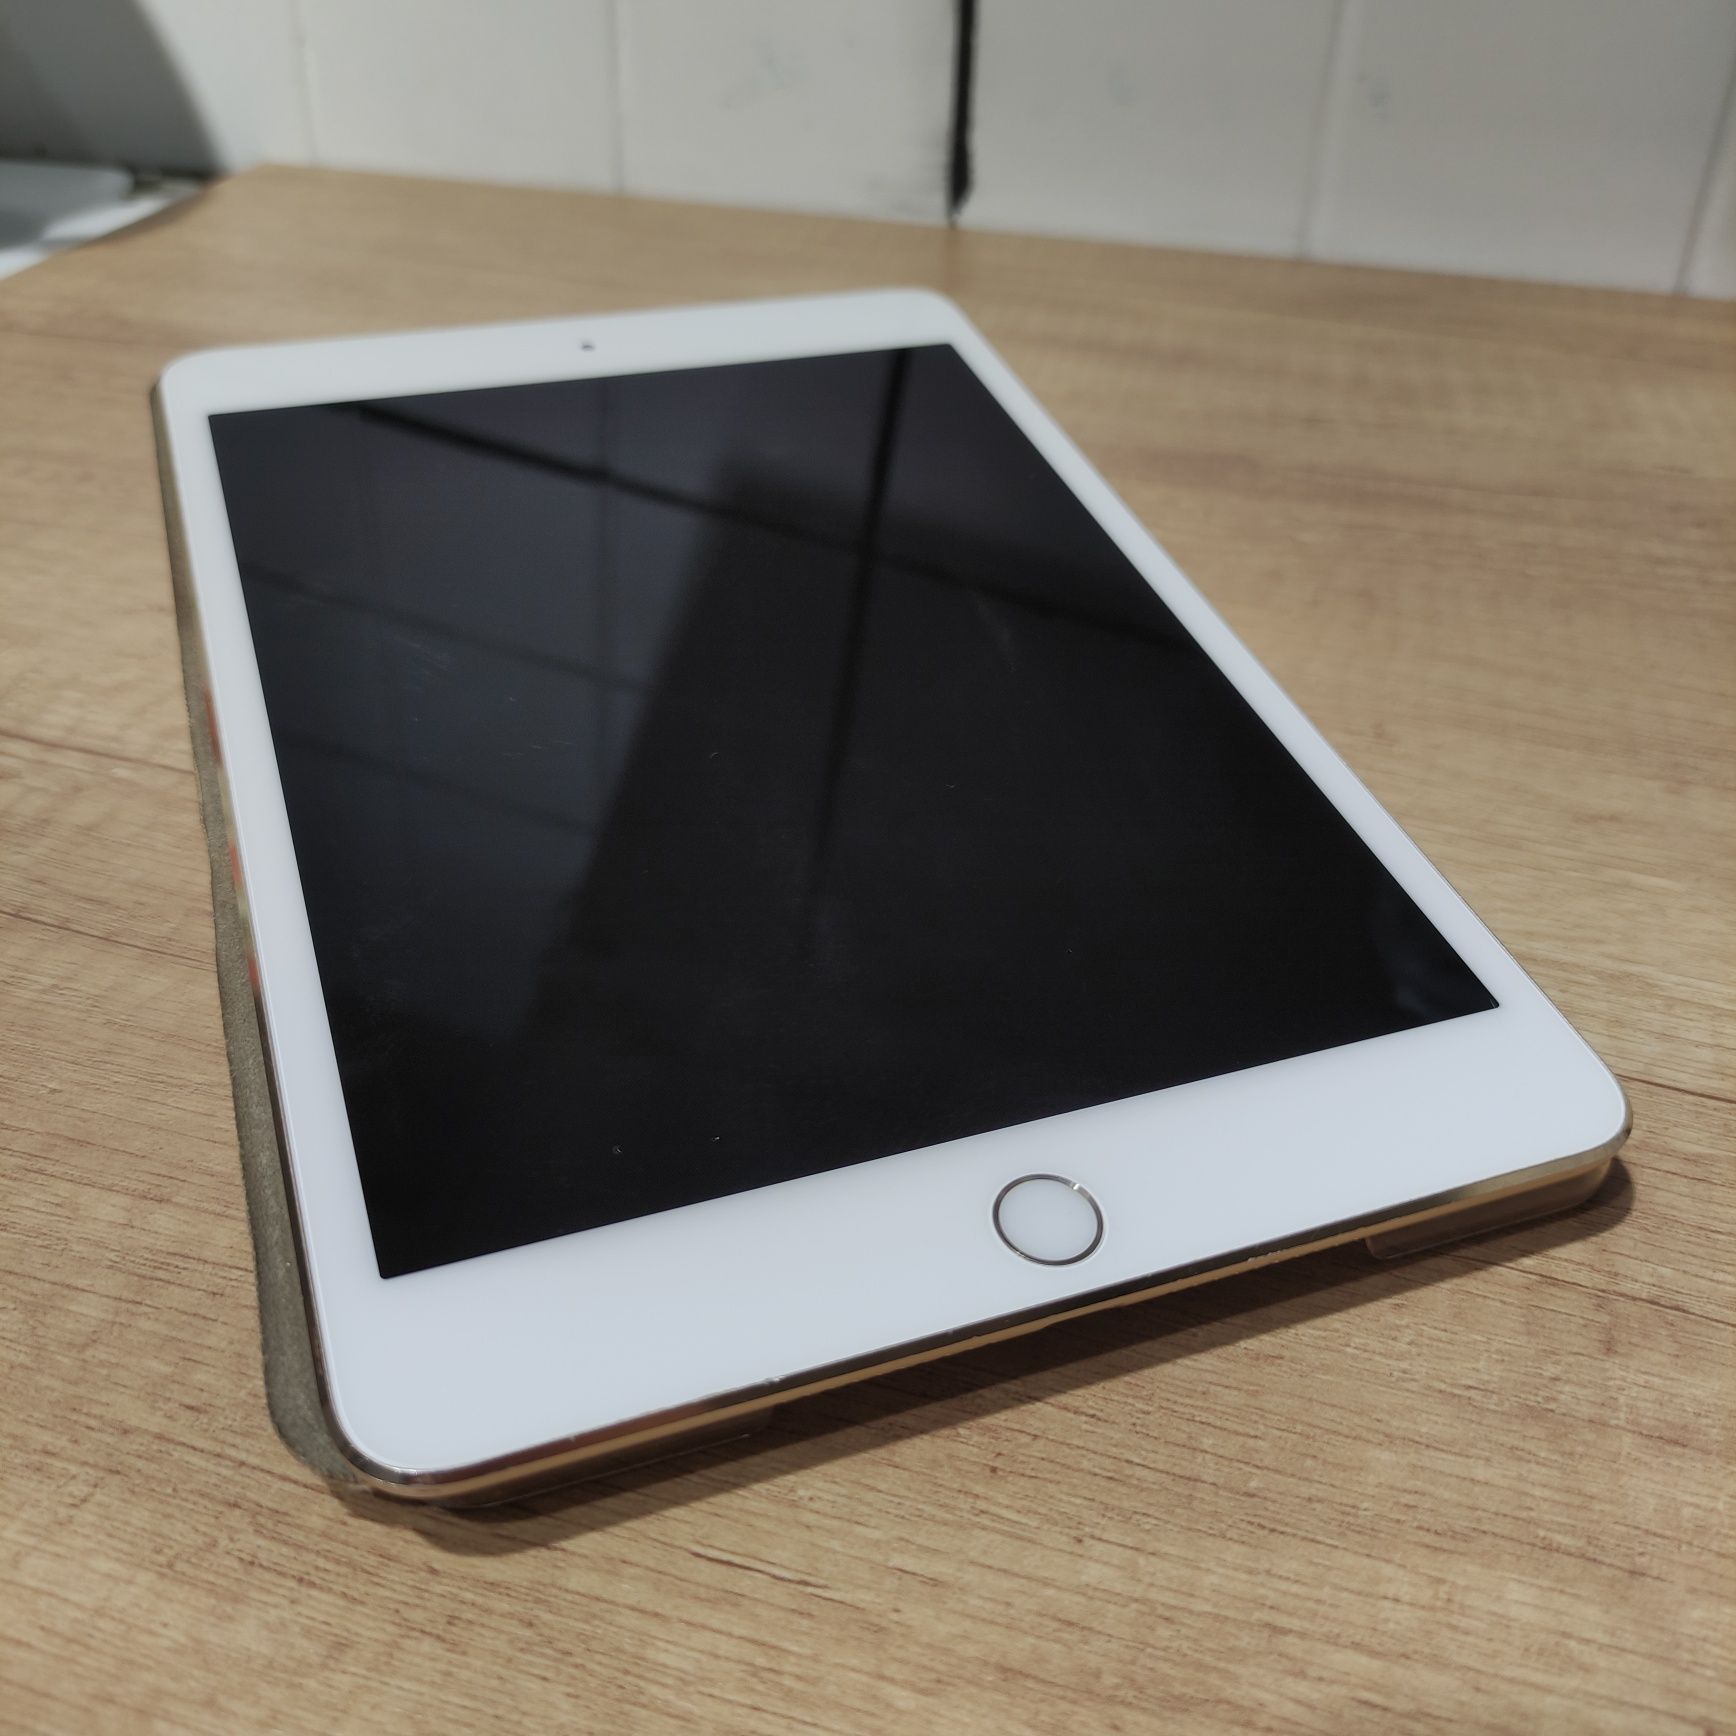 В идеале! iPad mini 4/IPS 7.9/Wi-Fi/Gold Version/1080p/Face Time!